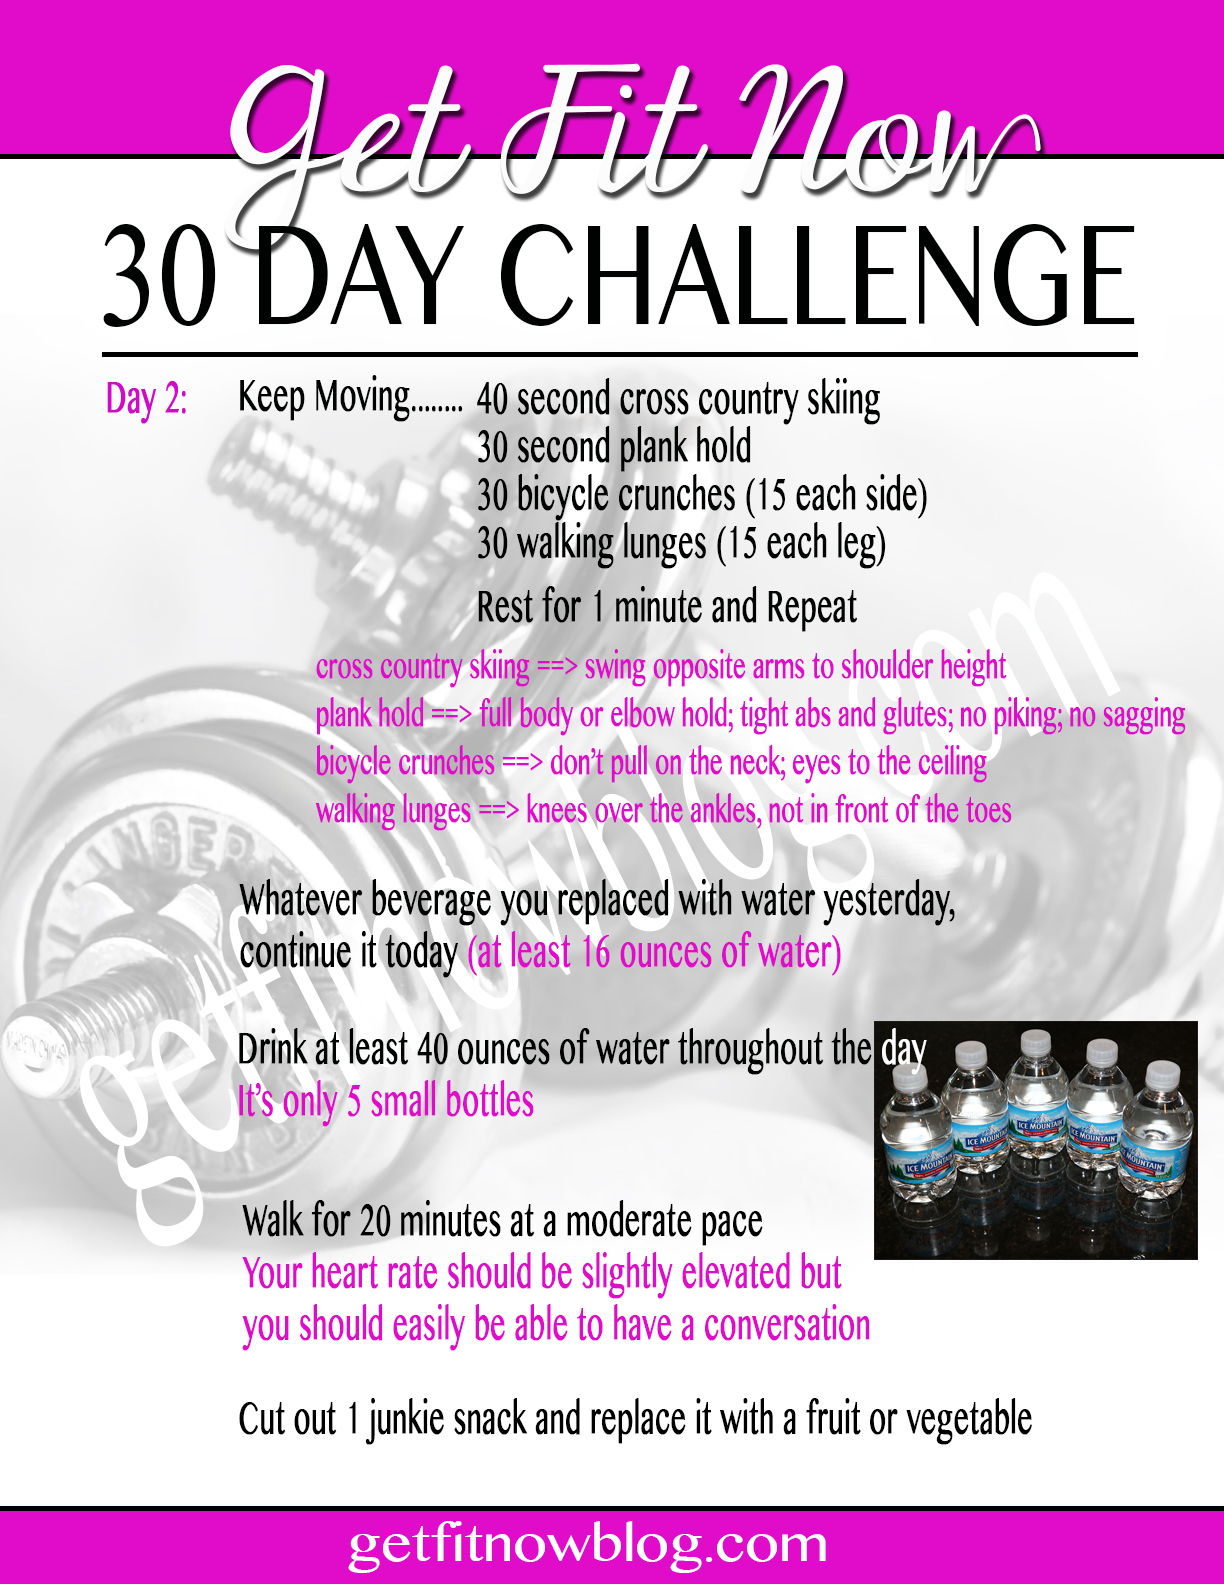 day 2 challenge